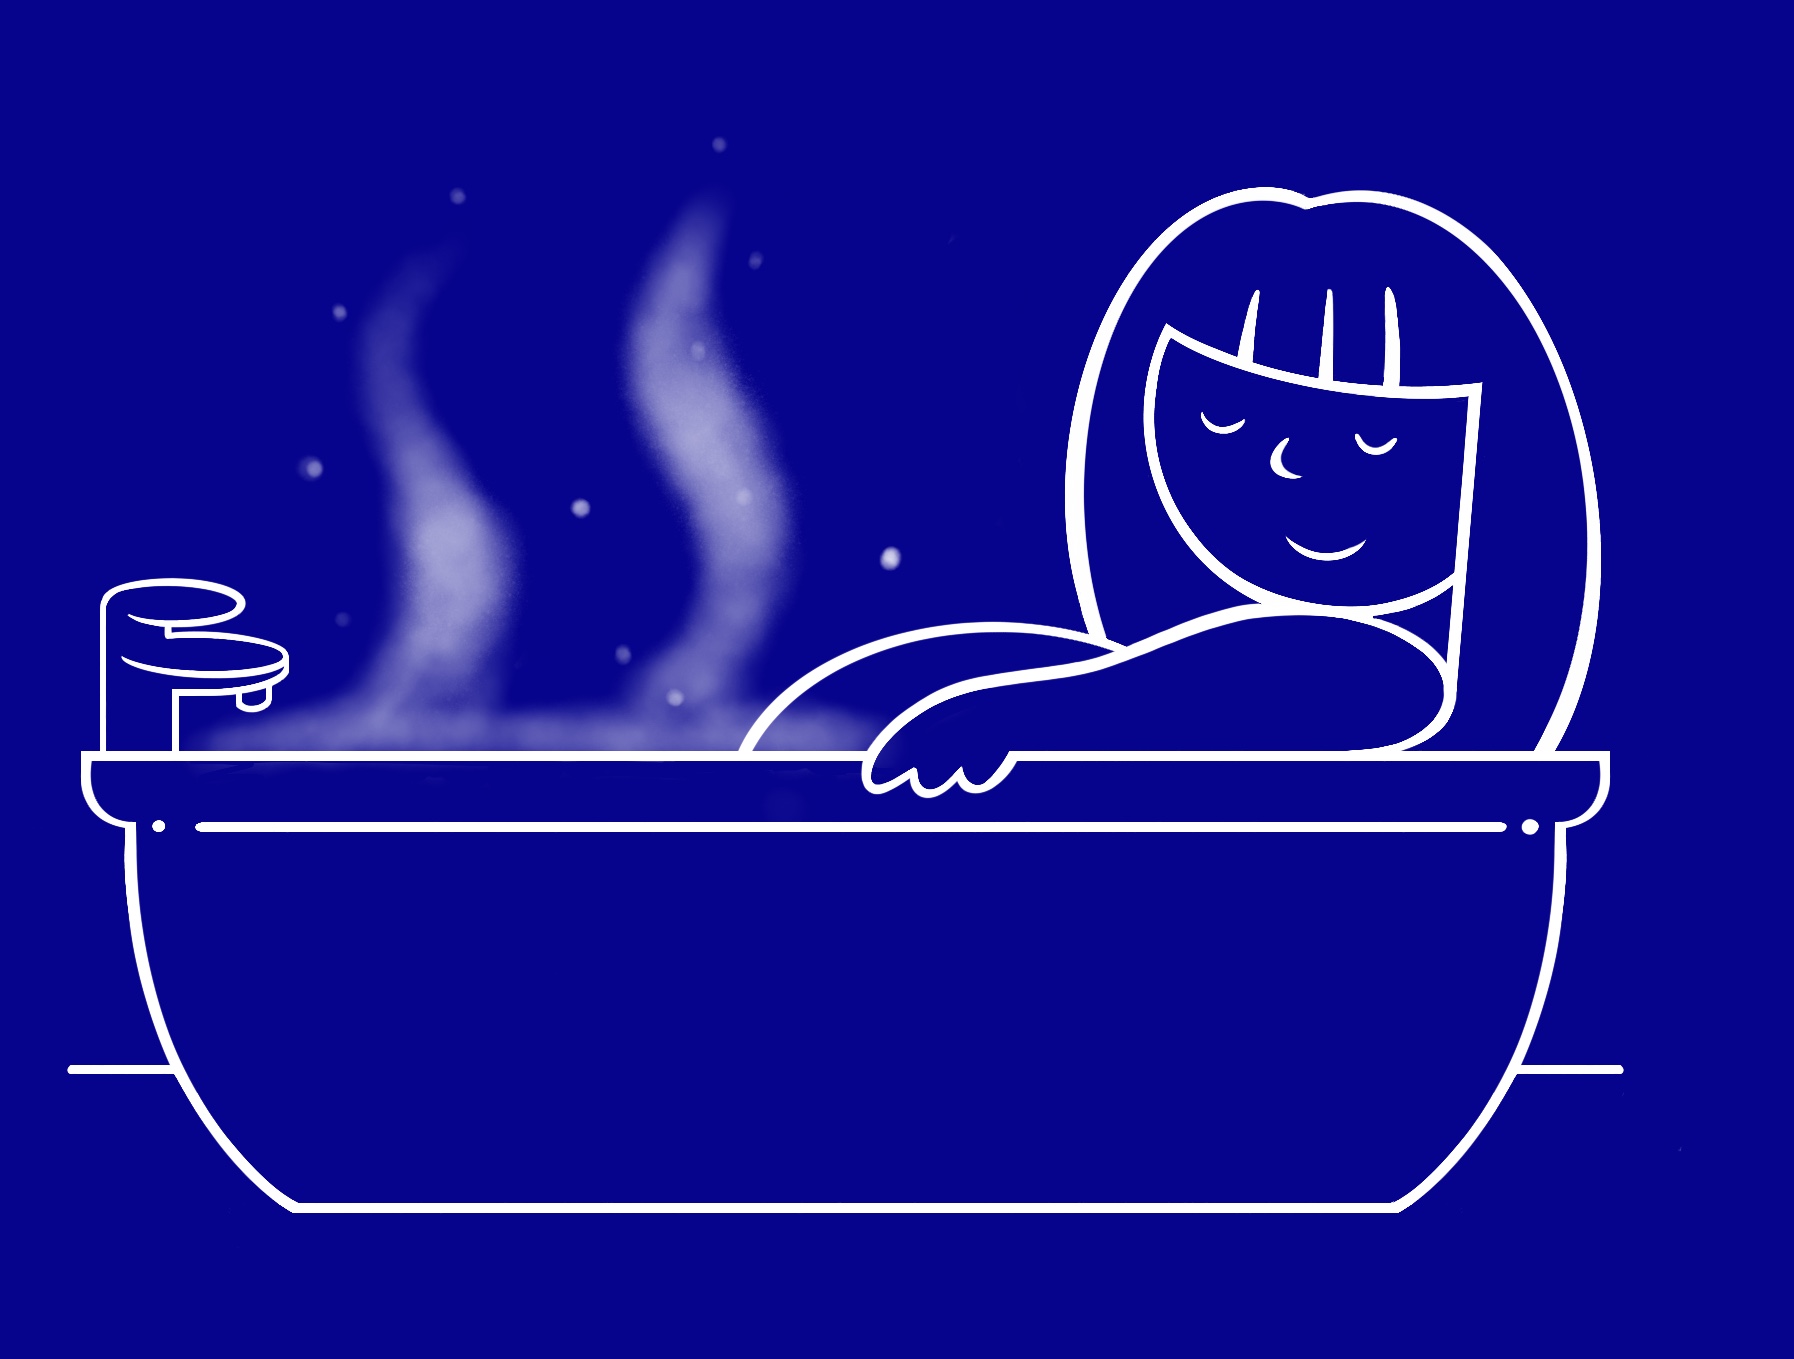 Respira i vapori di un bagno rilassante